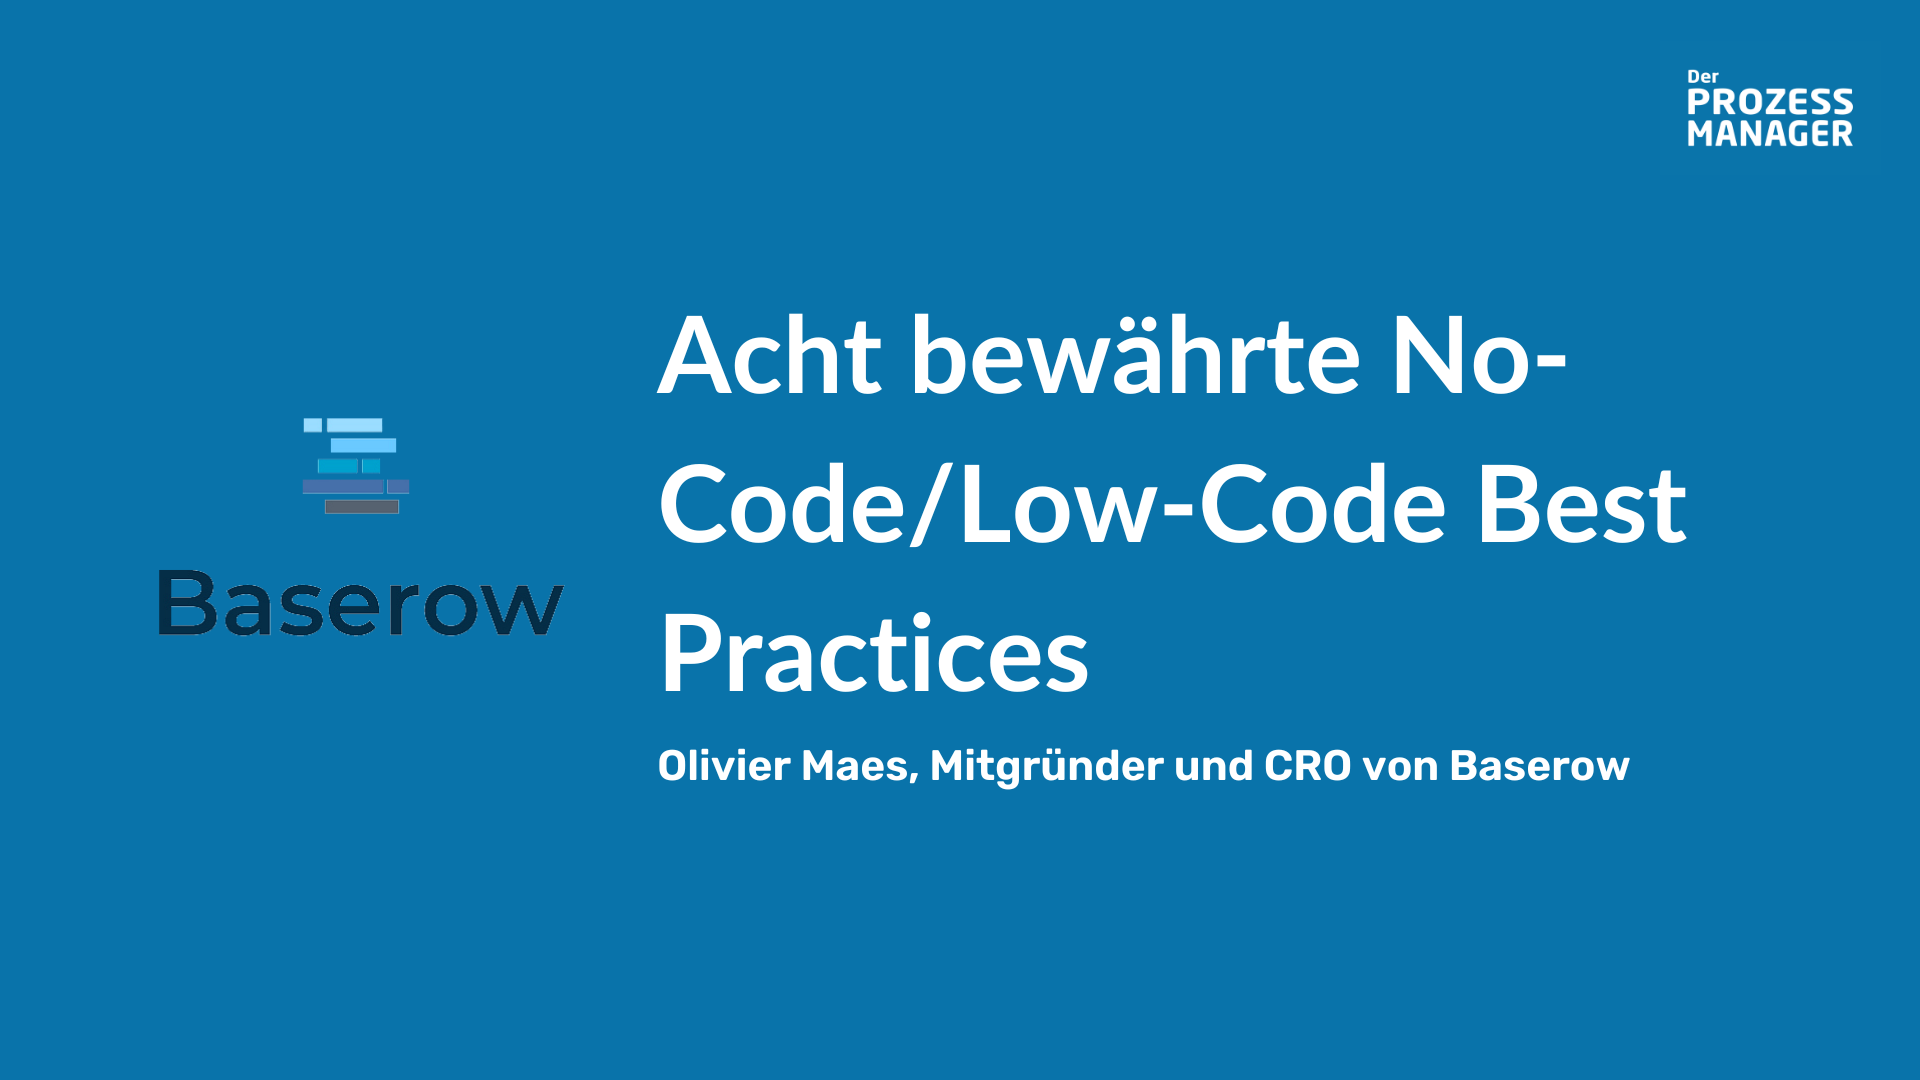 Acht bewährte No-Code/Low-Code Best Practices